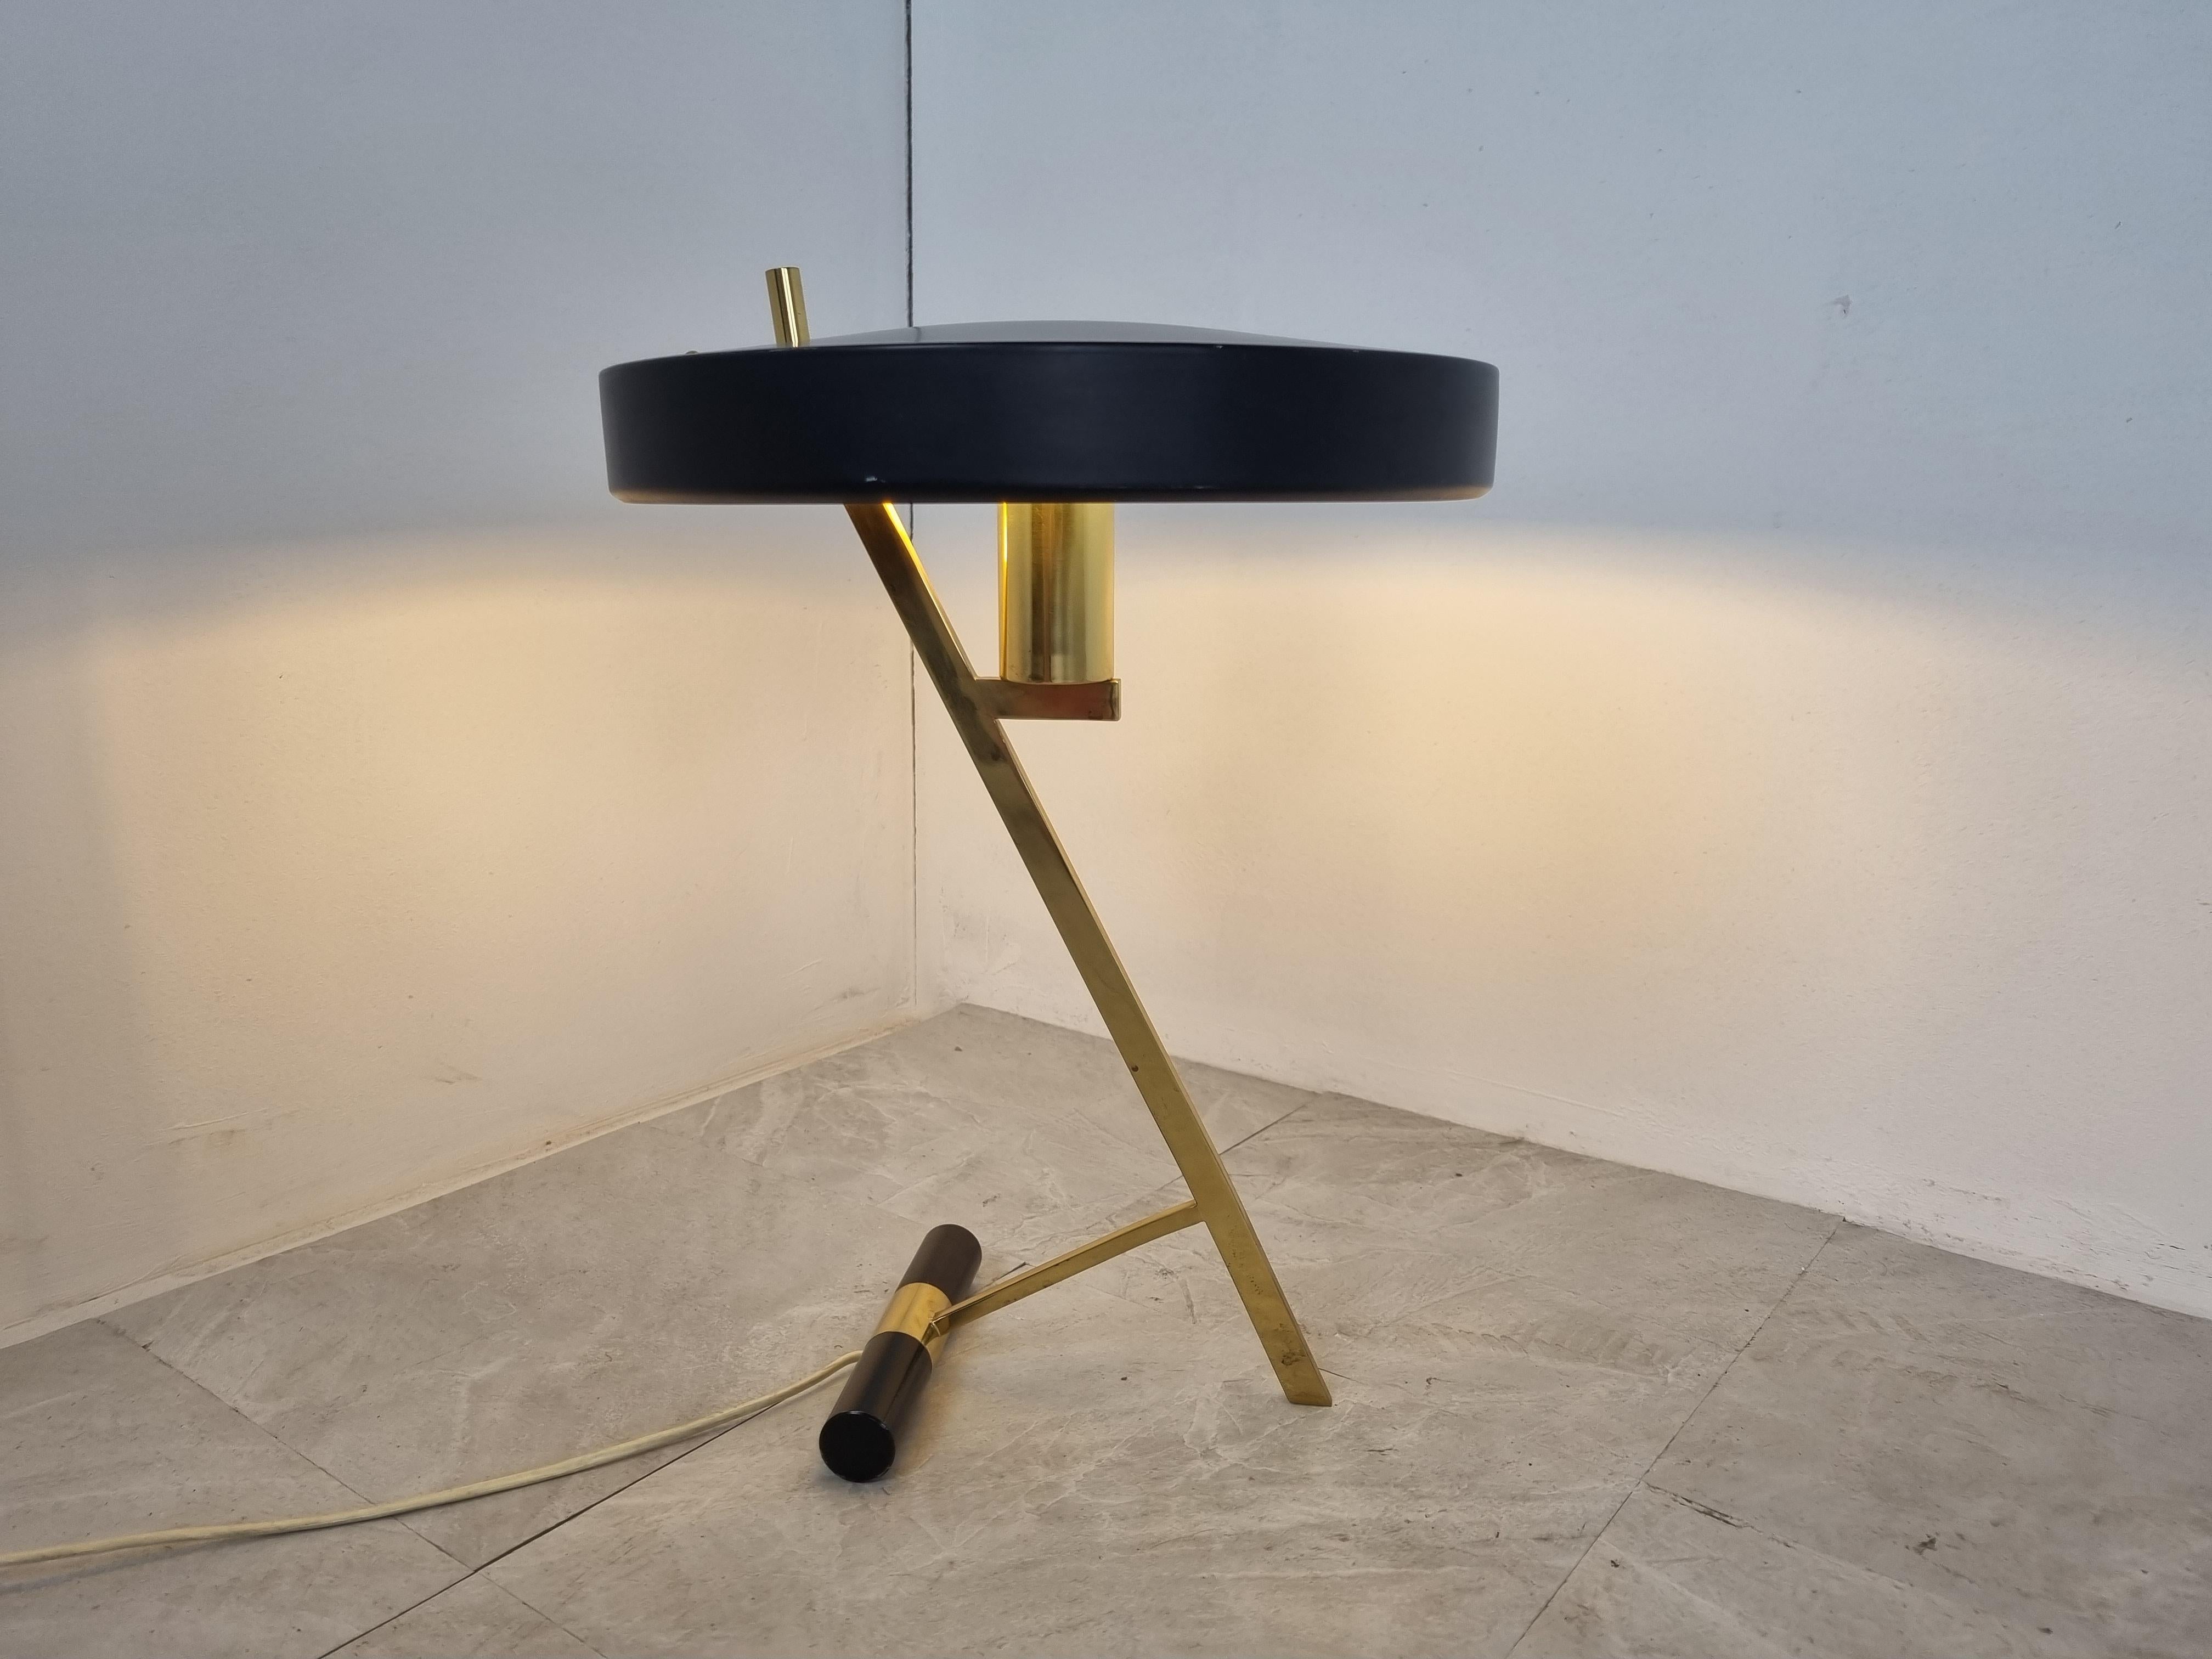 Space Age Vintage Louis Kalff Diplomat or Z Model Table Lamp, 1950s